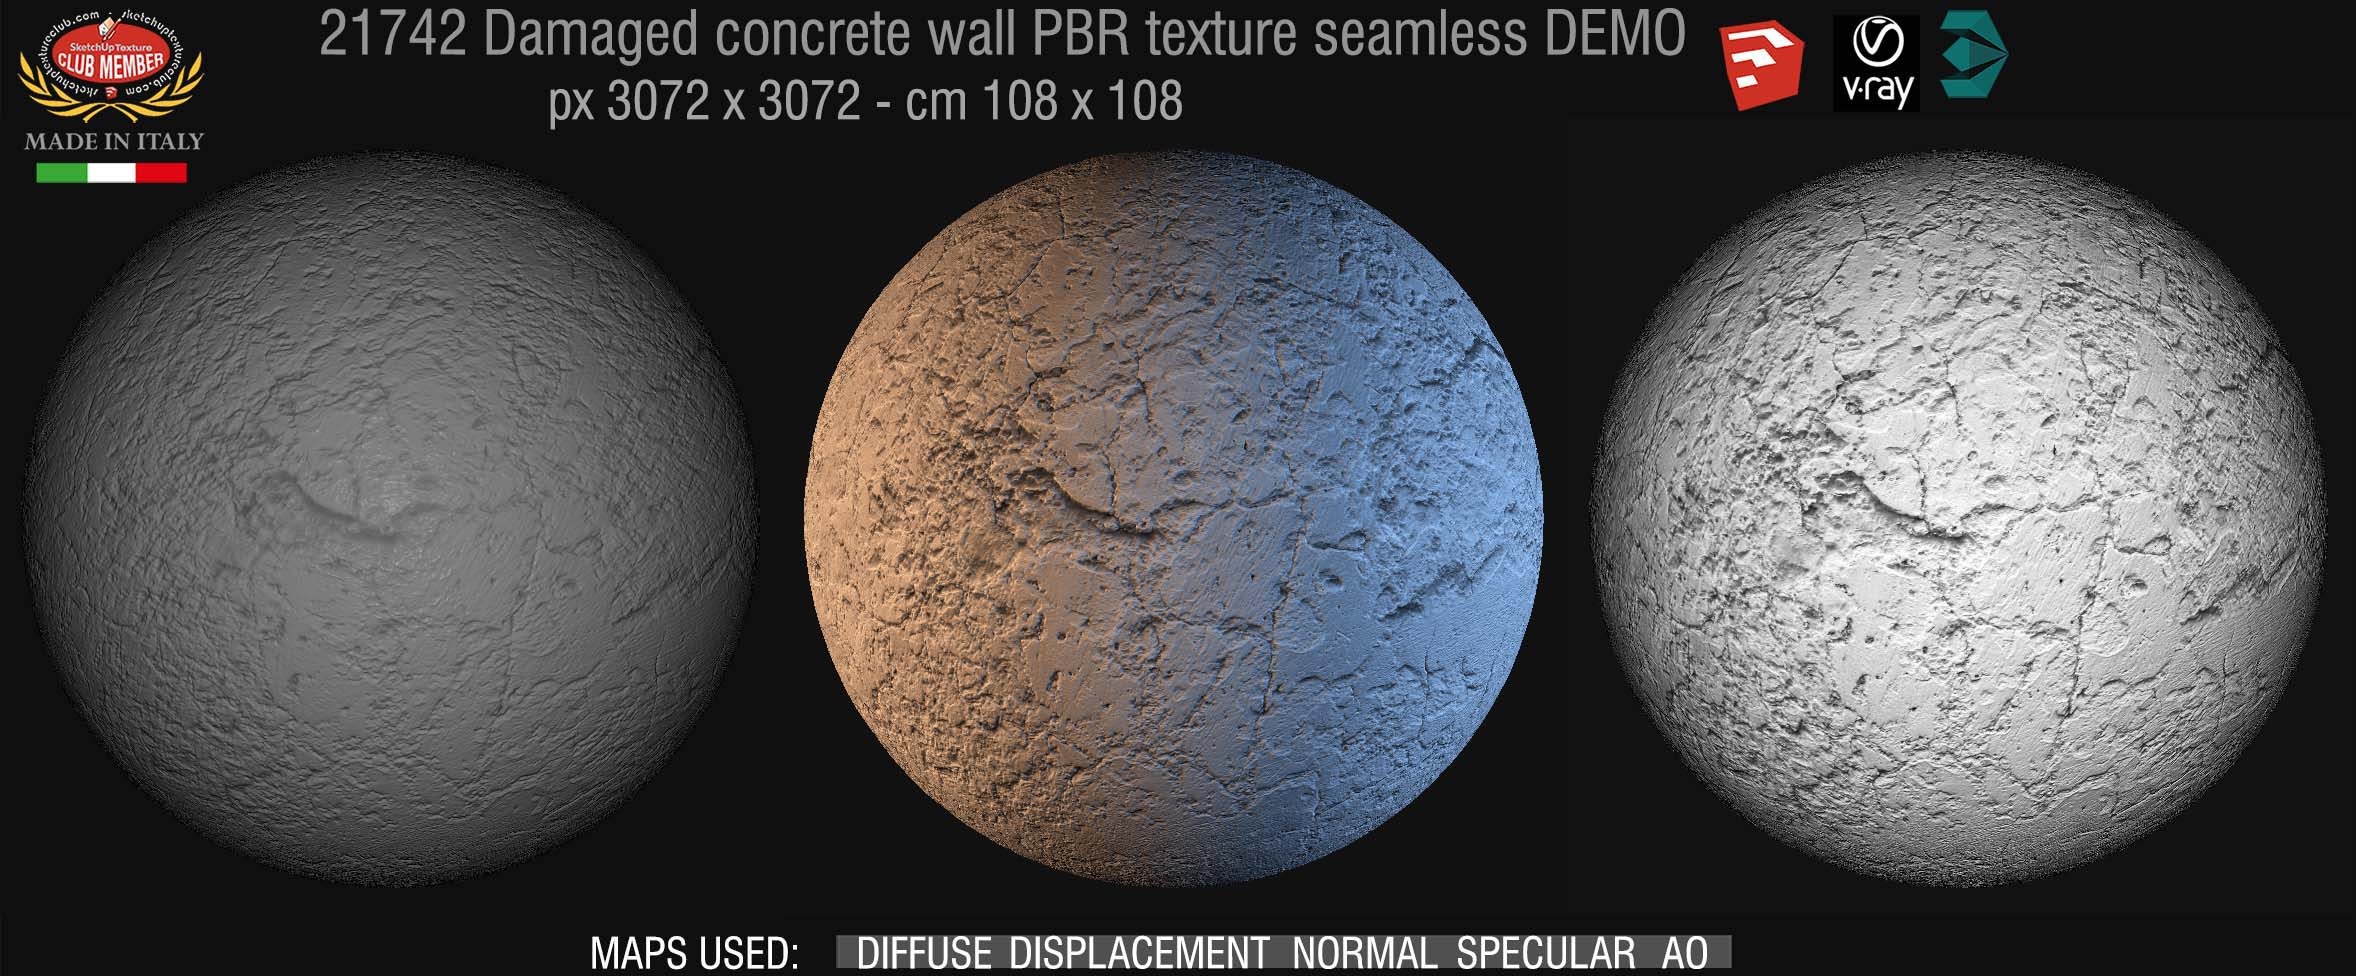 21472 Damaged concrete wall PBR texture seamless DEMO